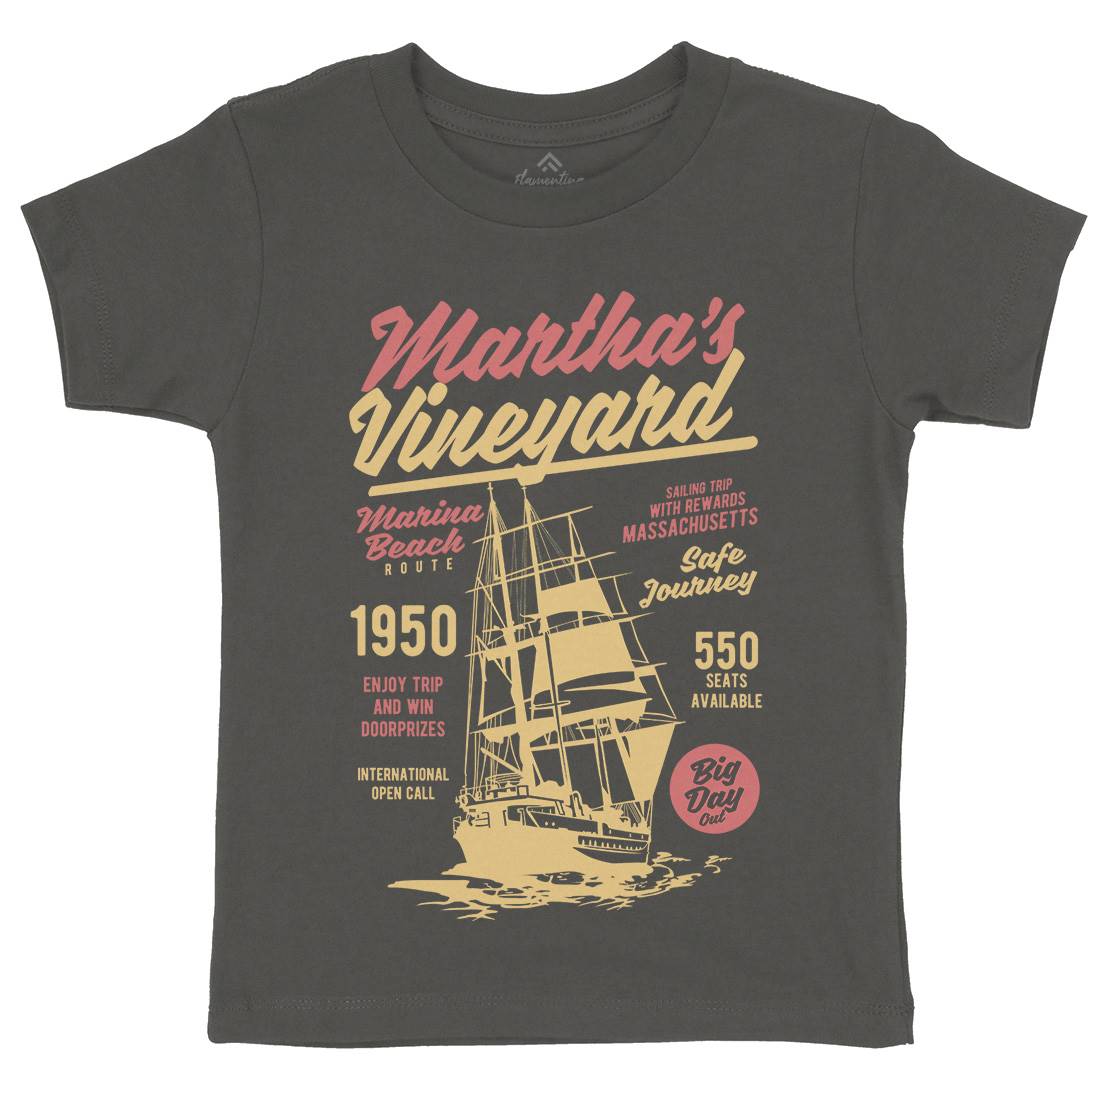 Marthas Vineyard Kids Organic Crew Neck T-Shirt Navy B421